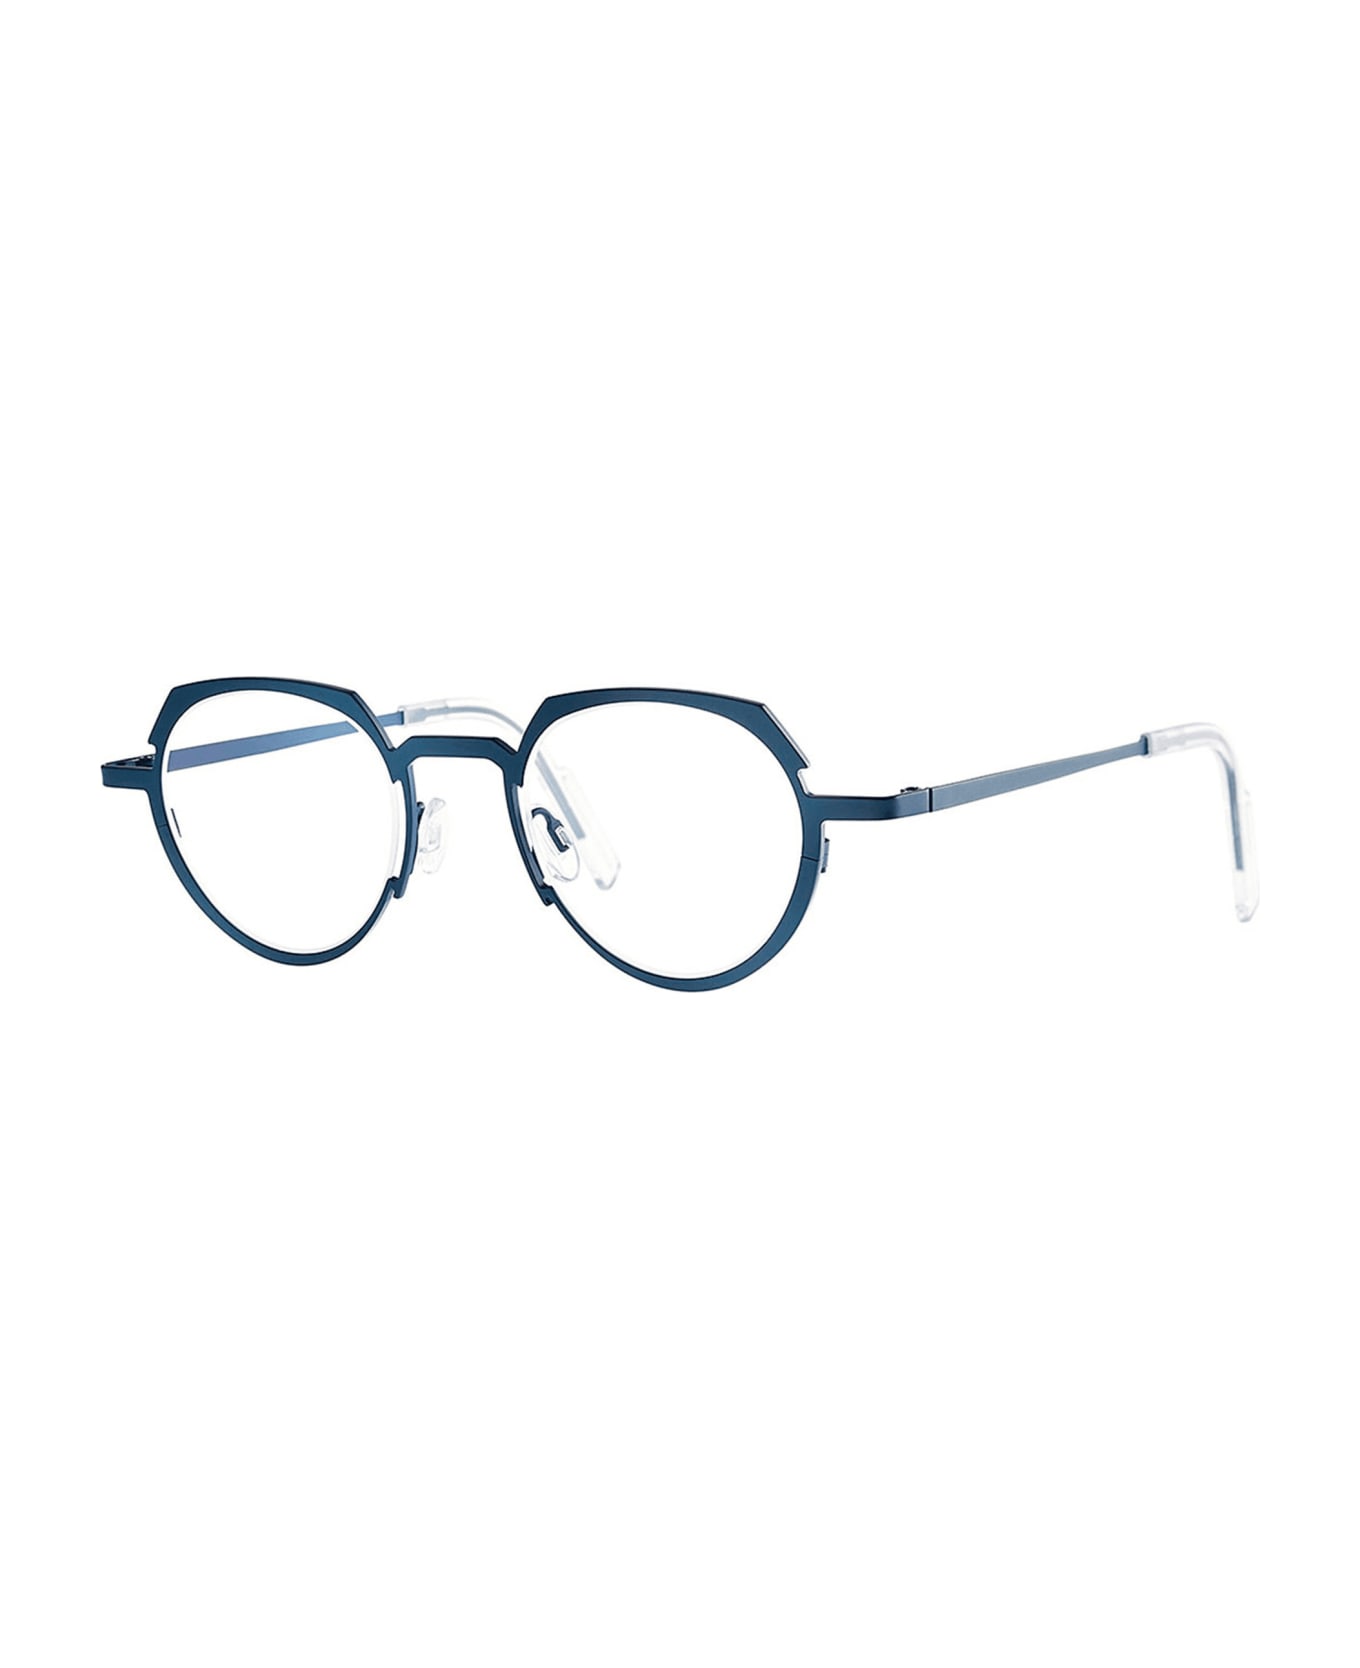 Theo Eyewear Receiver - 353 Dark Night Rx Glasses - Blue Navy